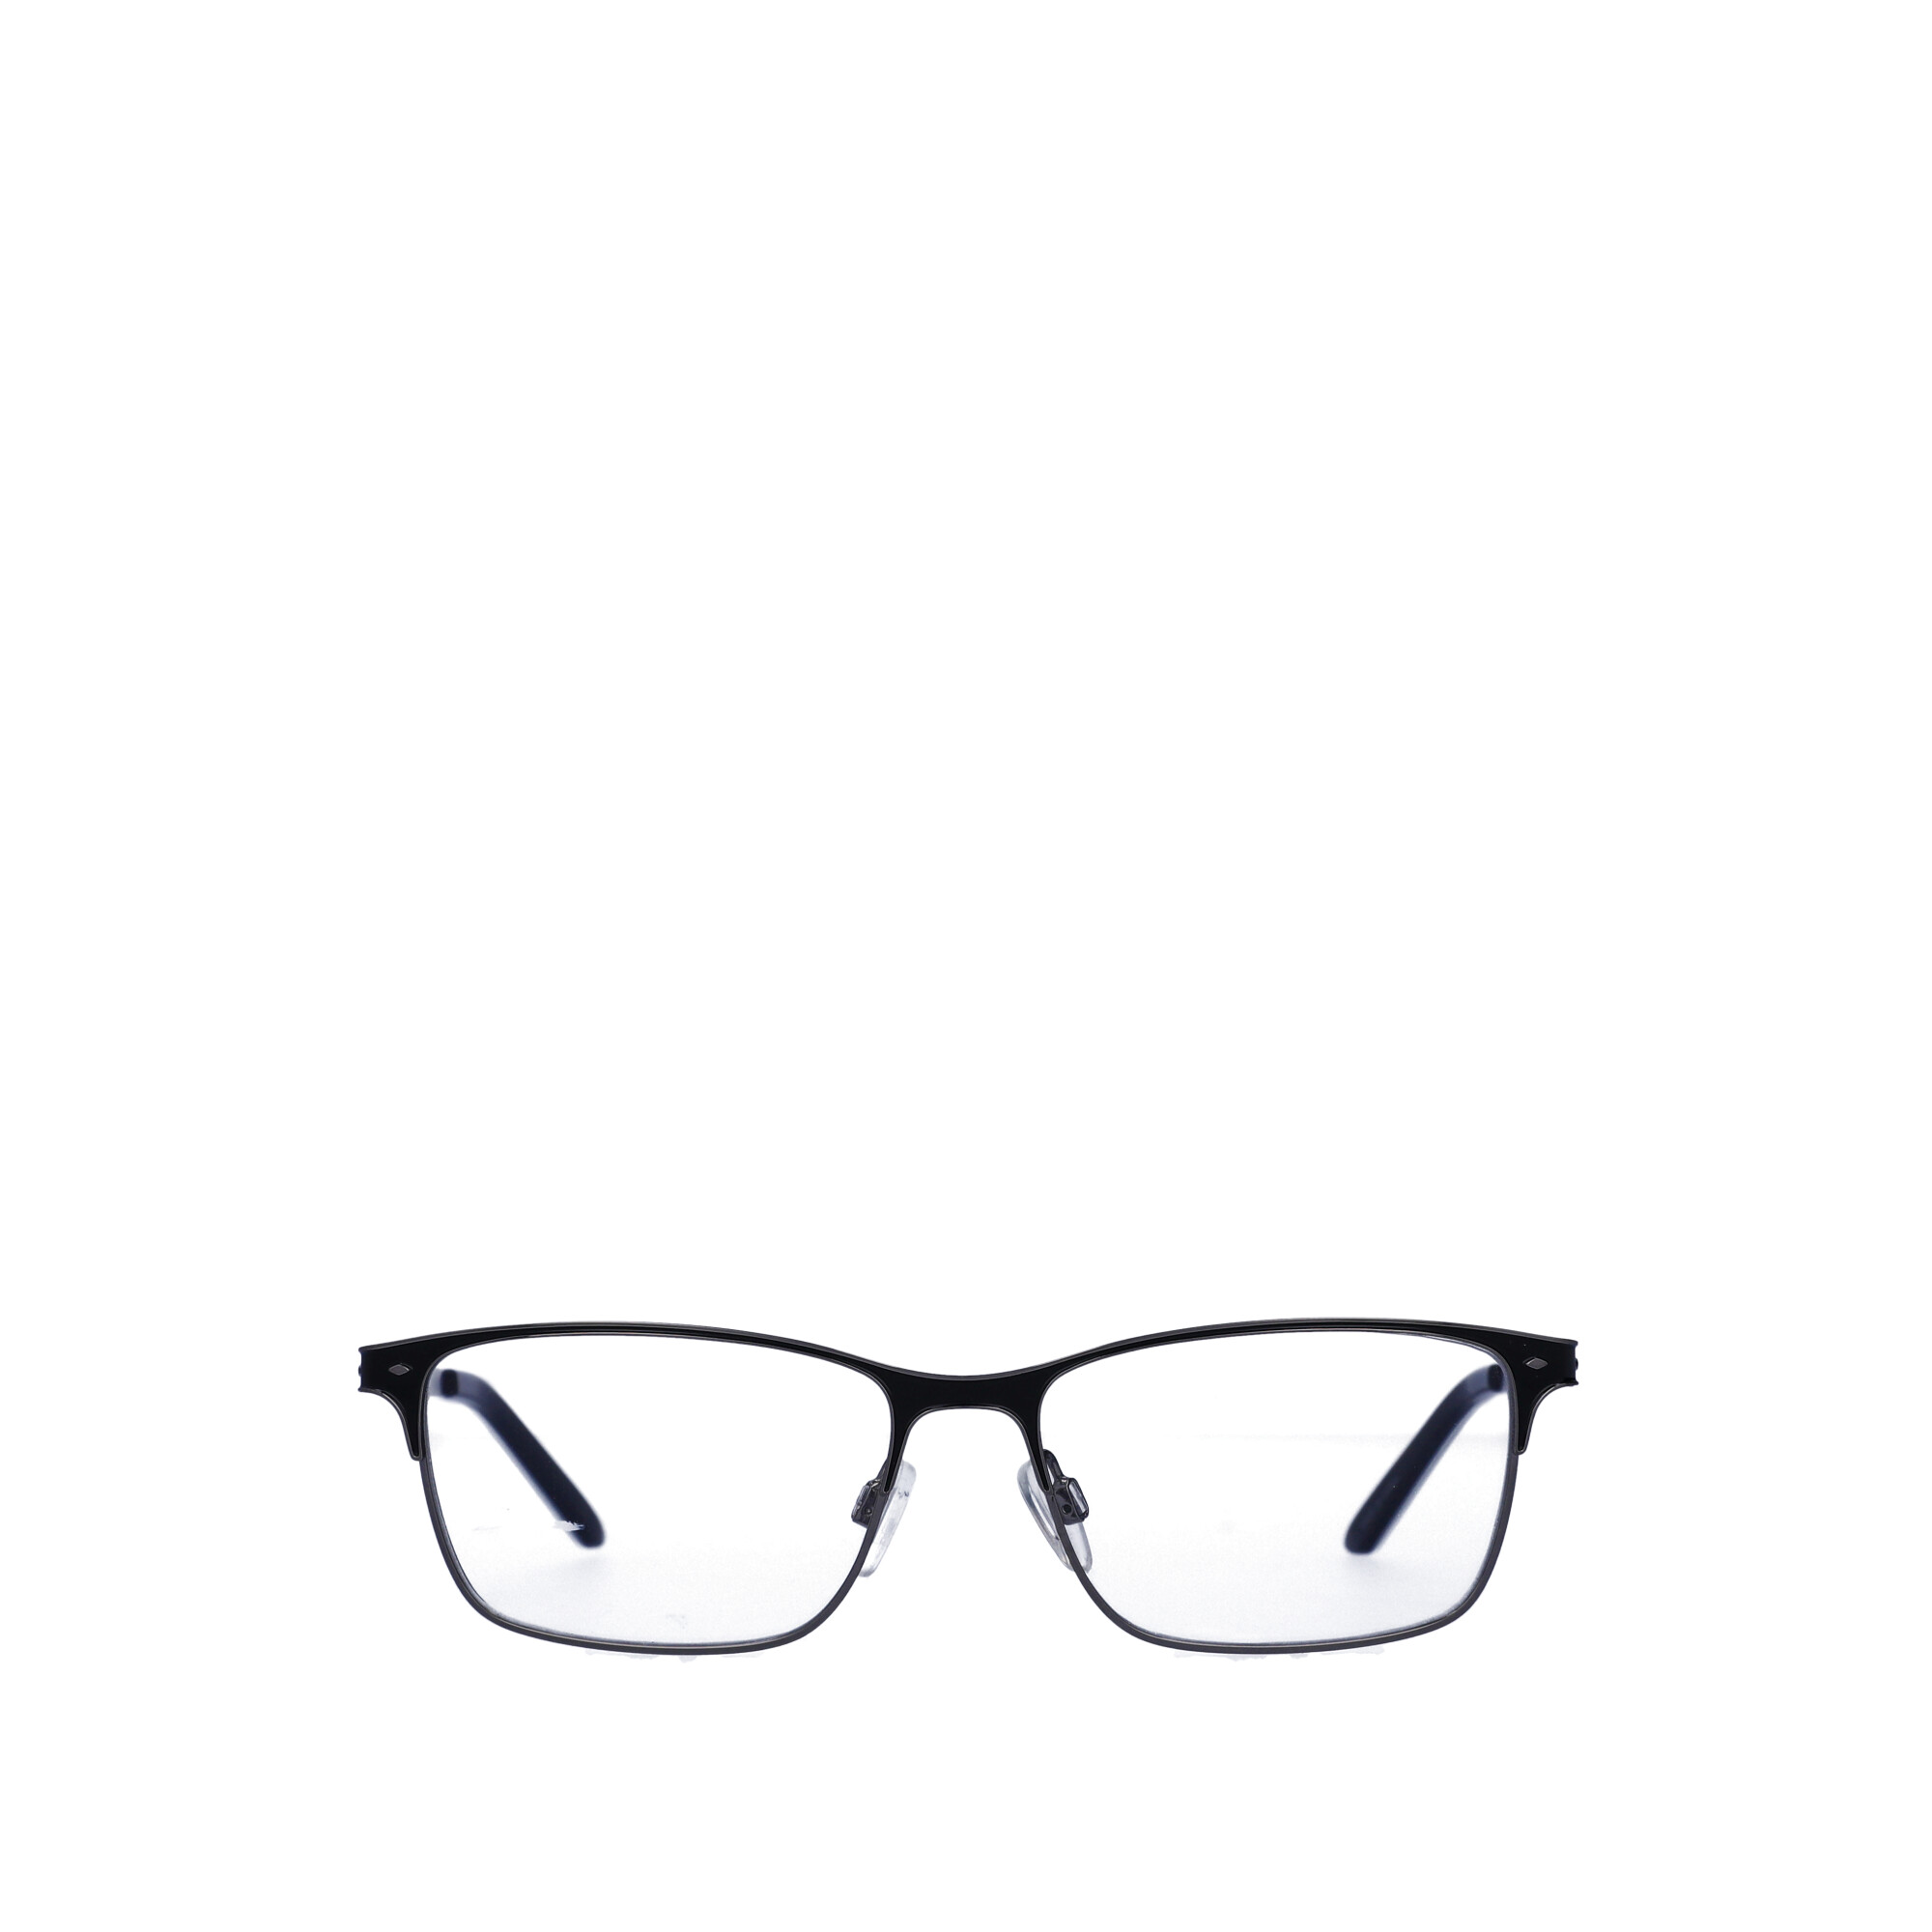 Walmart Men's Rx'able Eyeglasses, Mop51, Black, 52-15-140 - image 5 of 13